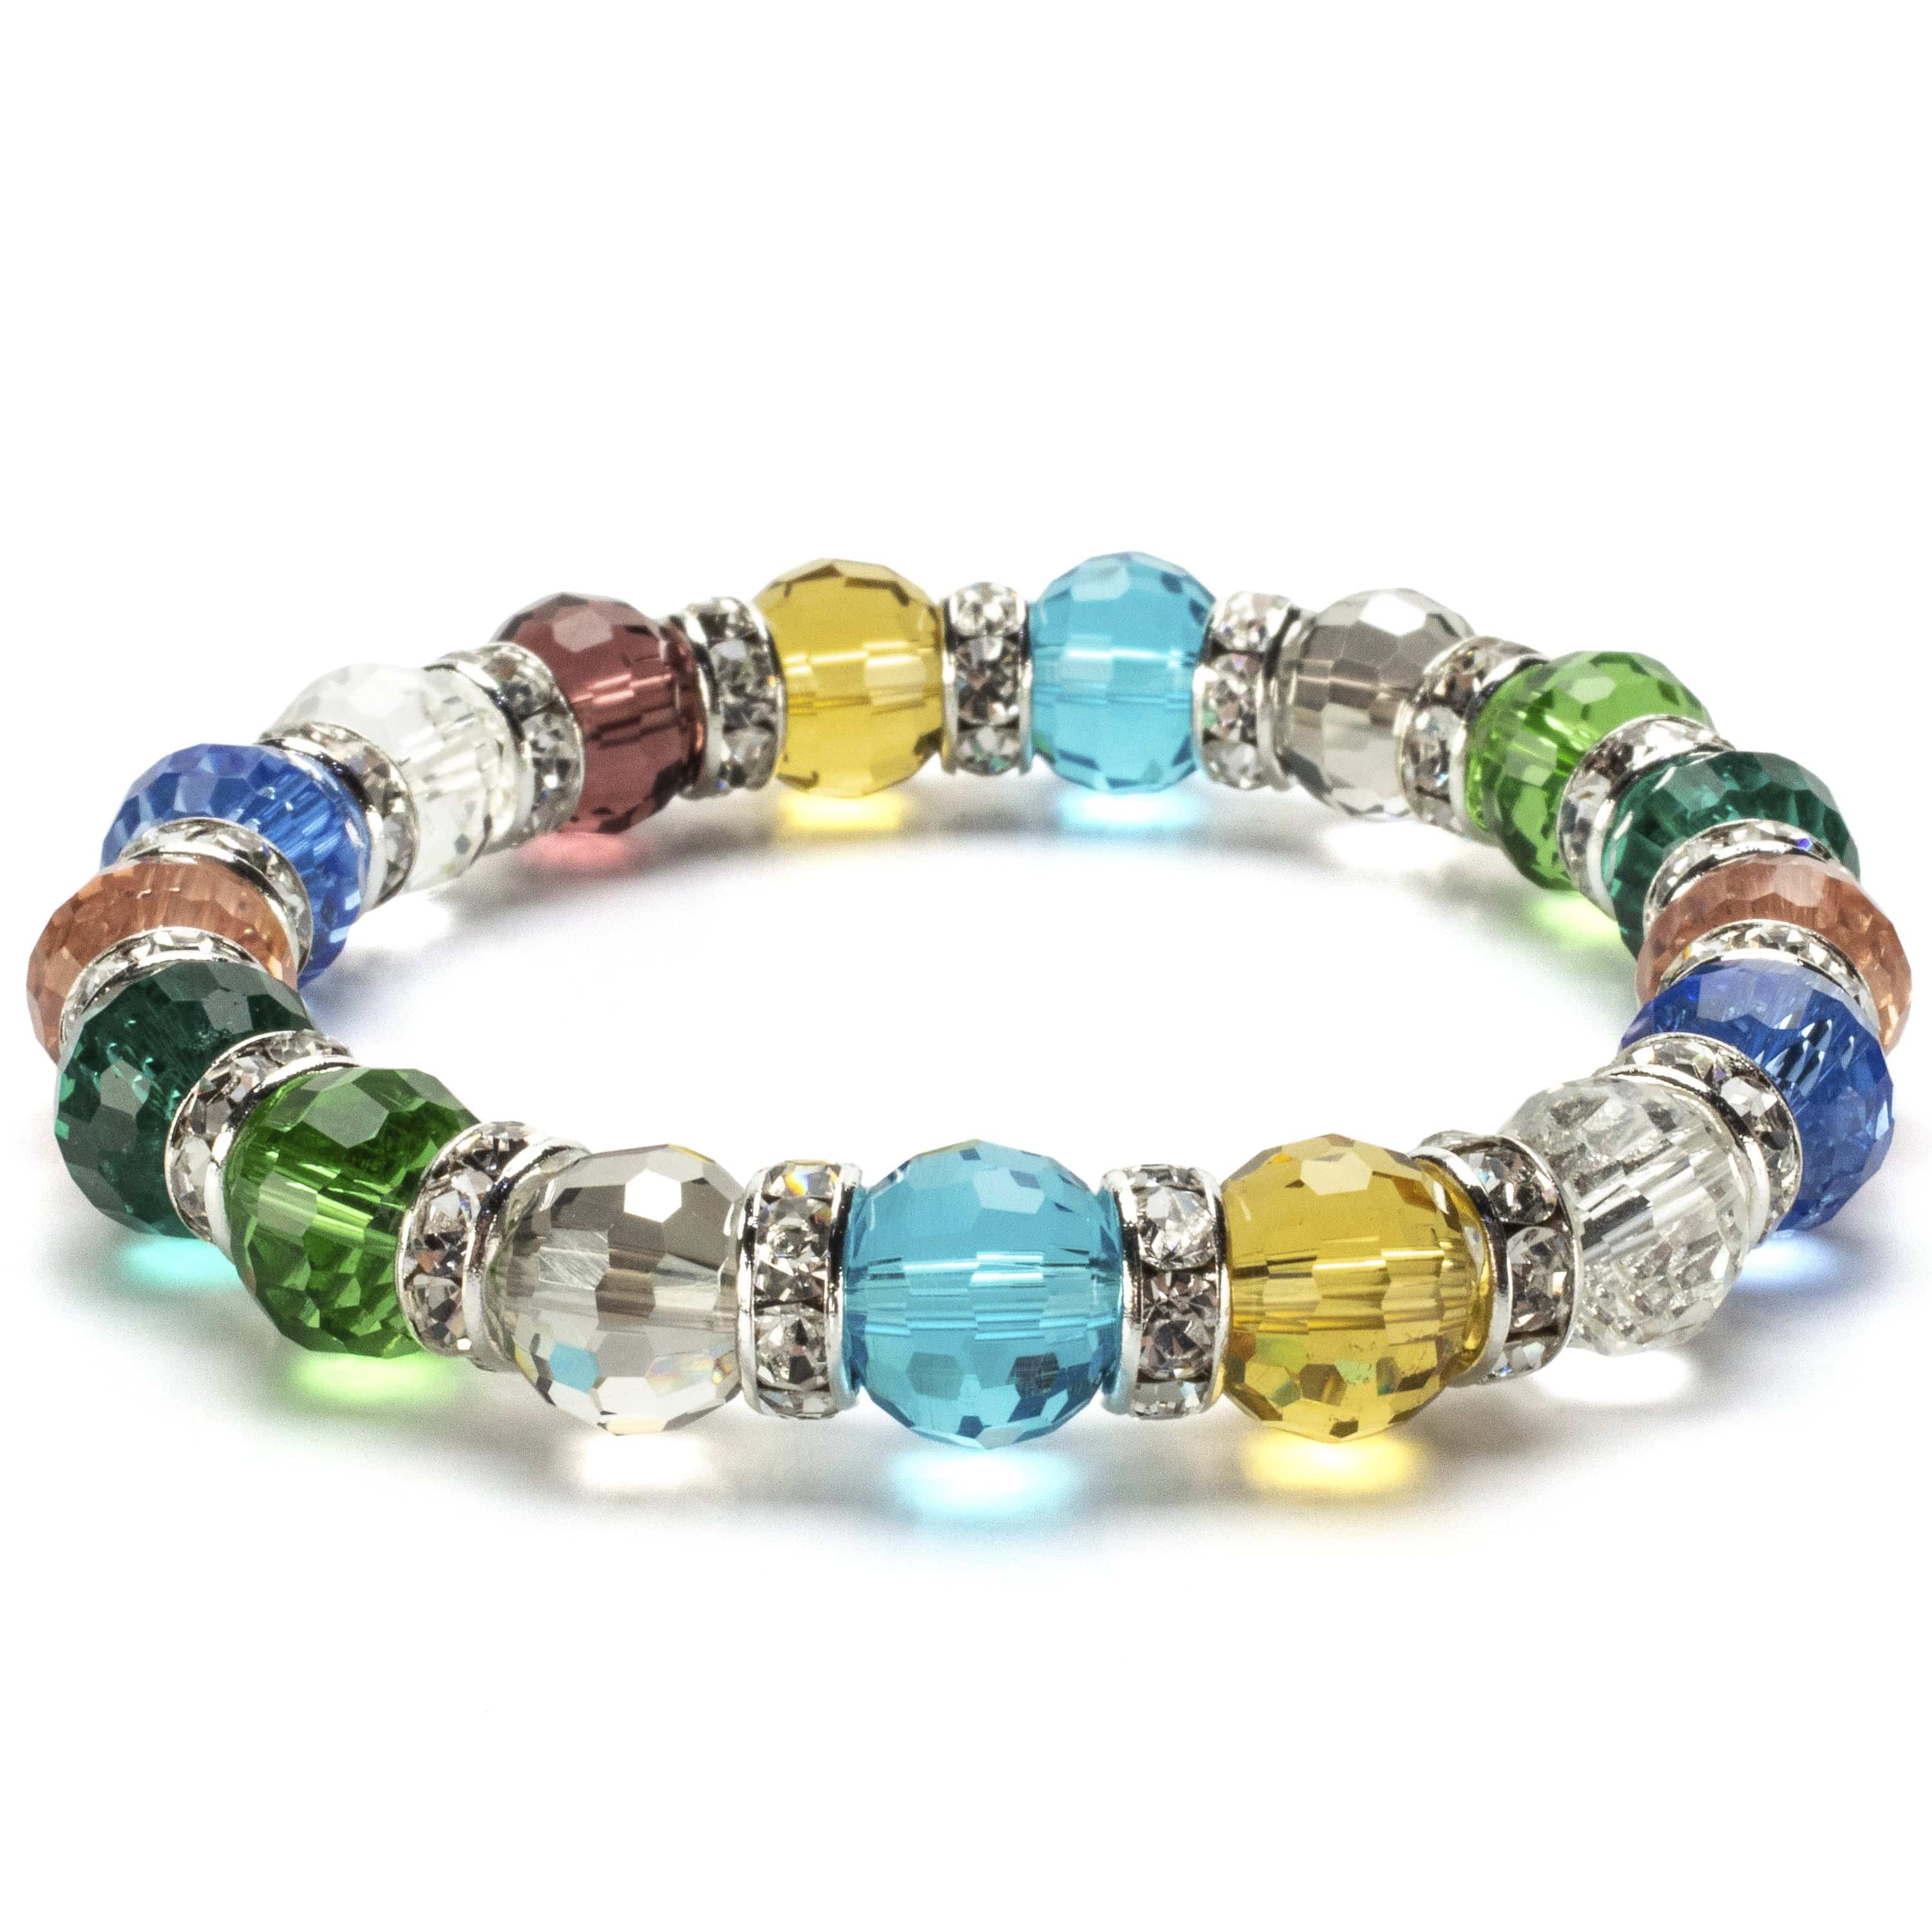 Kalifano Gorgeous Glass Jewelry BLUE-BGG-31 - Gorgeous Glass Bracelet - Multicolored BLUE-BGG-31